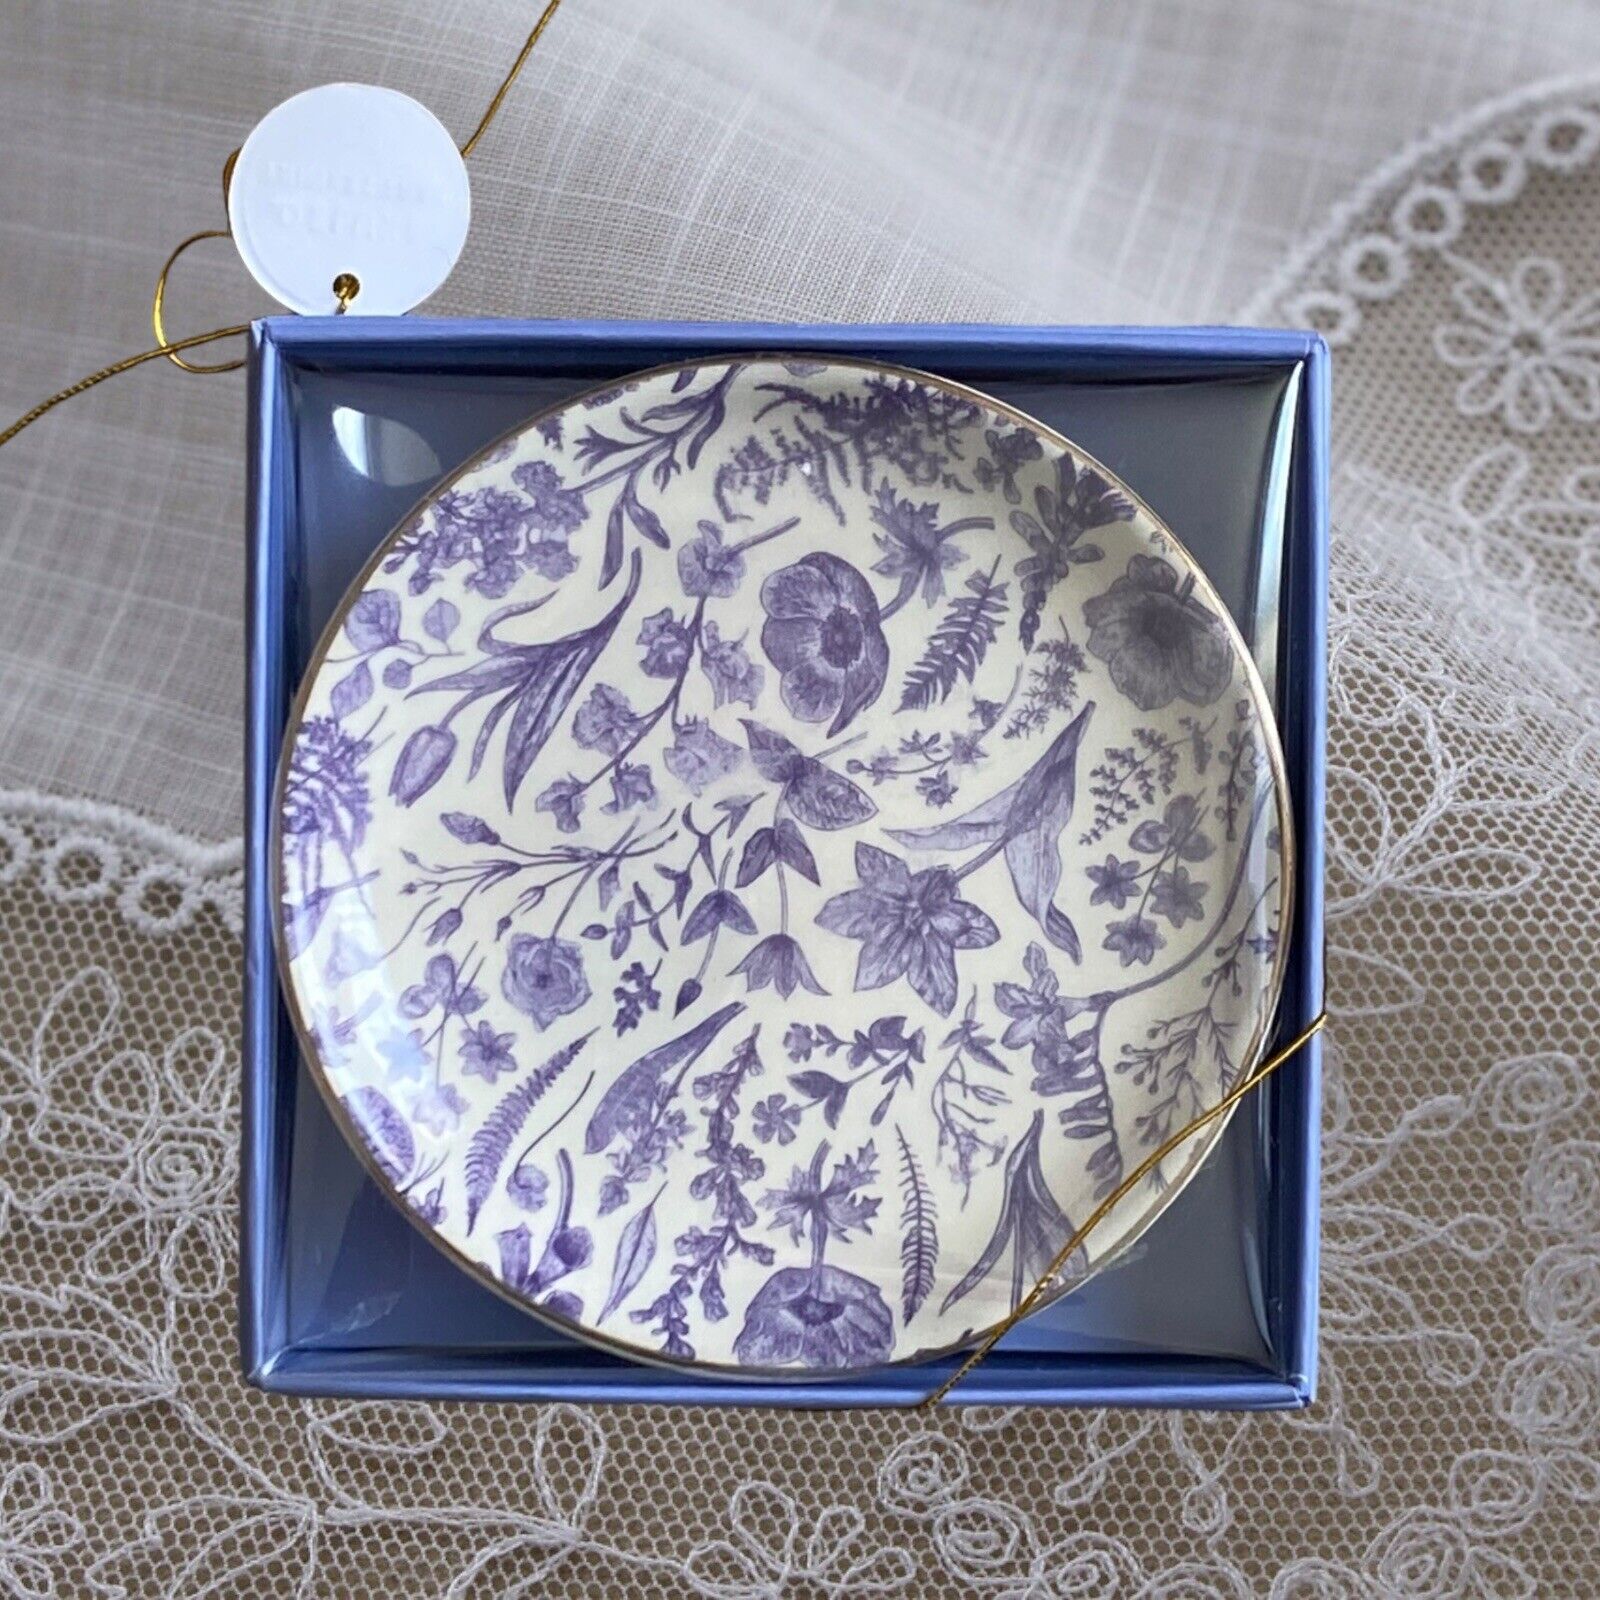 Eccolo Round Ceramic Trinket Dish Tray 4” Diameter Blue White Floral In Gift Box